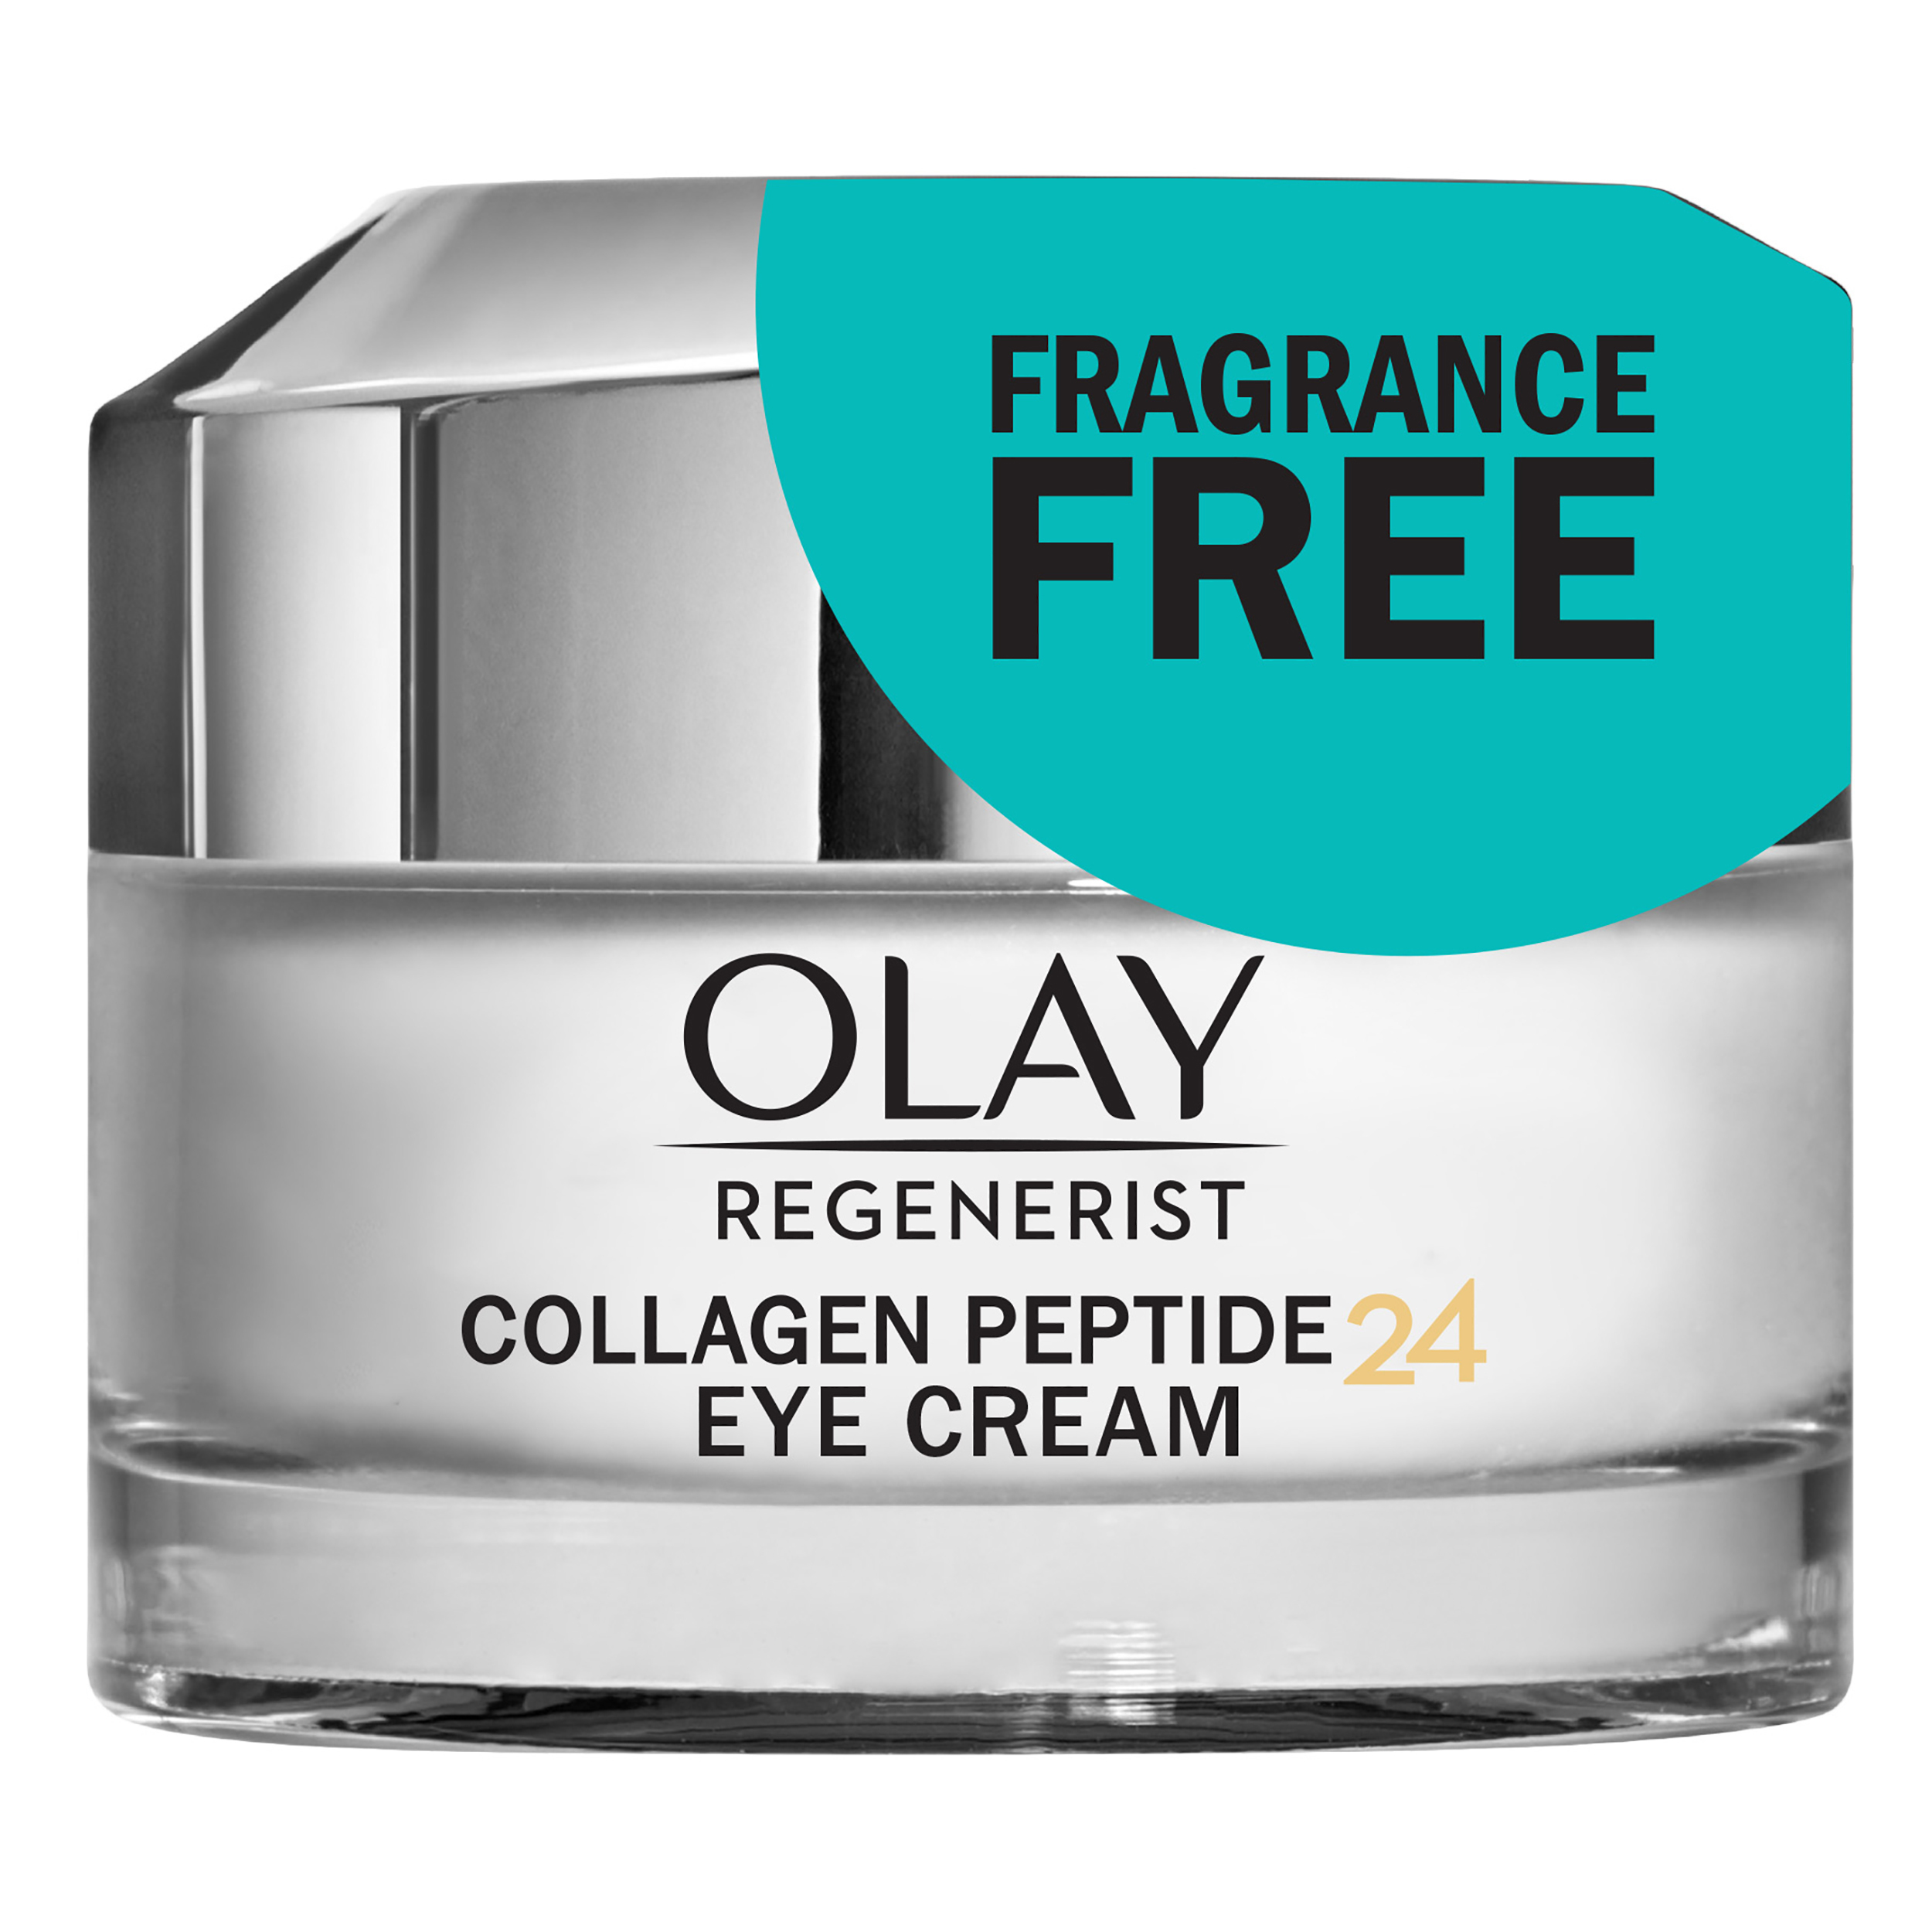 Olay Regenerist Collagen Peptide 24 Eye Cream, Fragrance-Free, All Skin, 0.5 fl oz - image 1 of 11